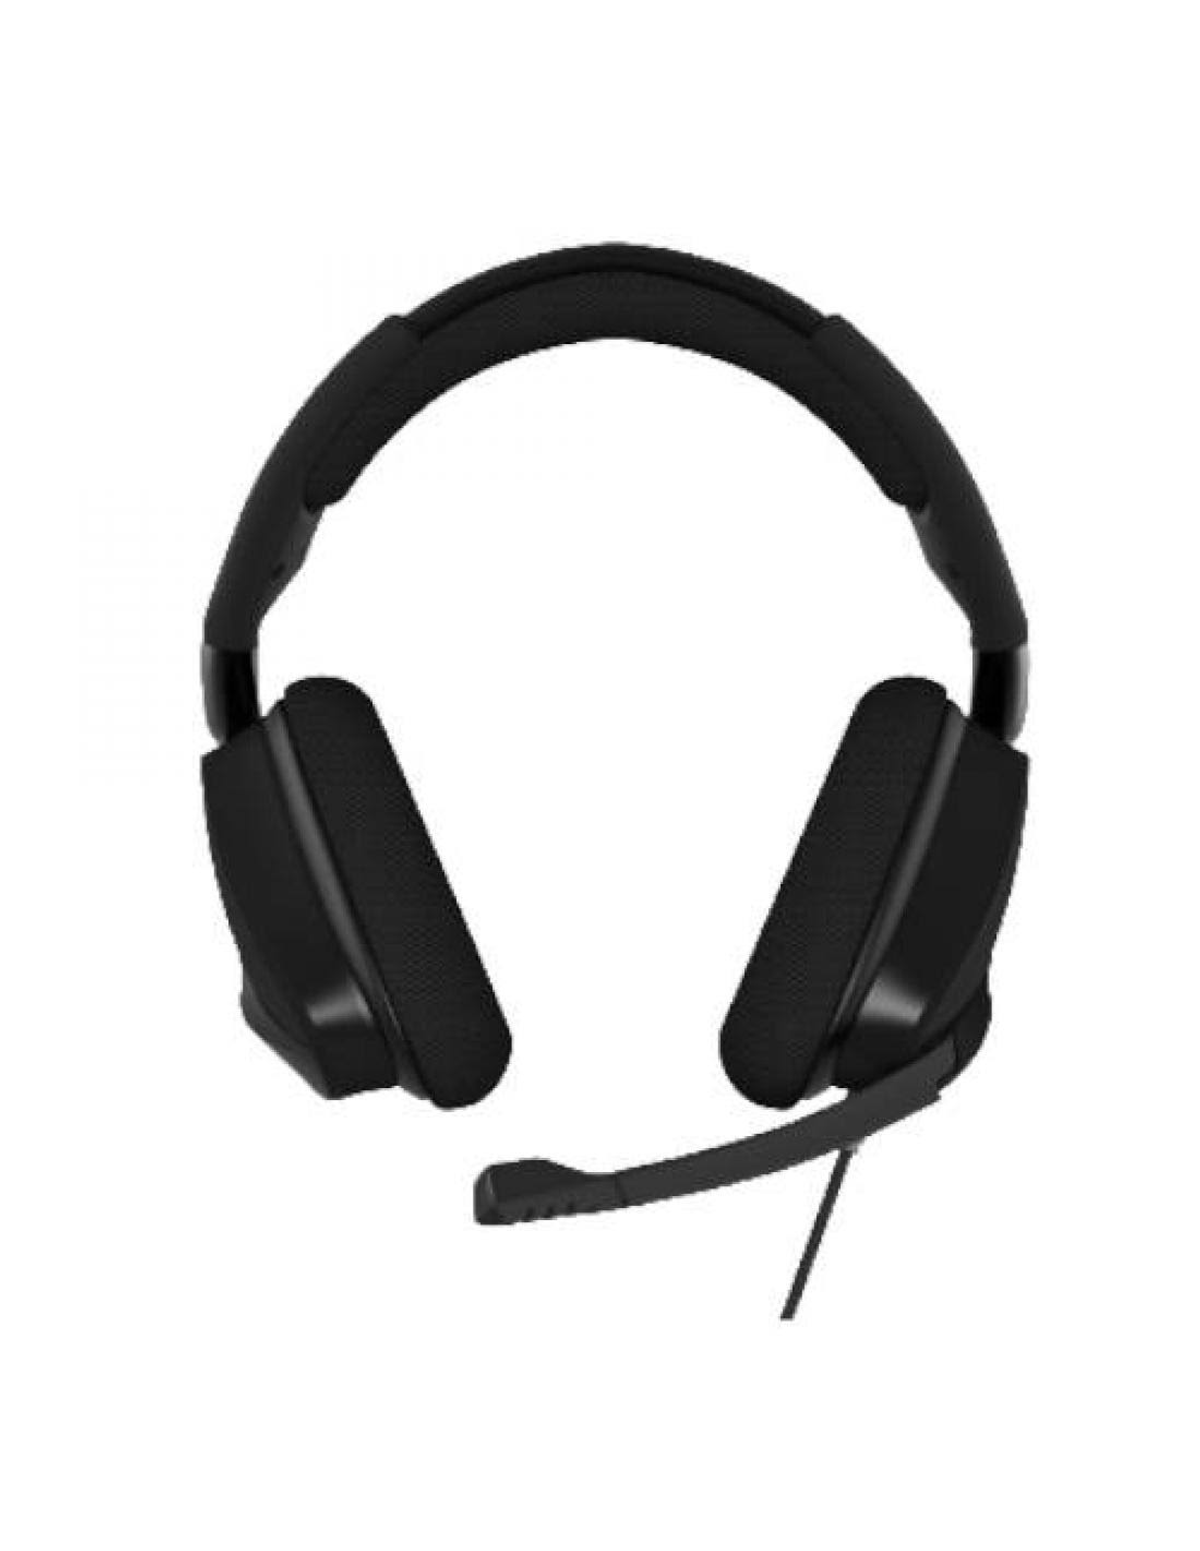 CORSAIR CA-9011205-EU VOID ELITE SURROUND Over-ear CARBON, Headset Carbon Gaming